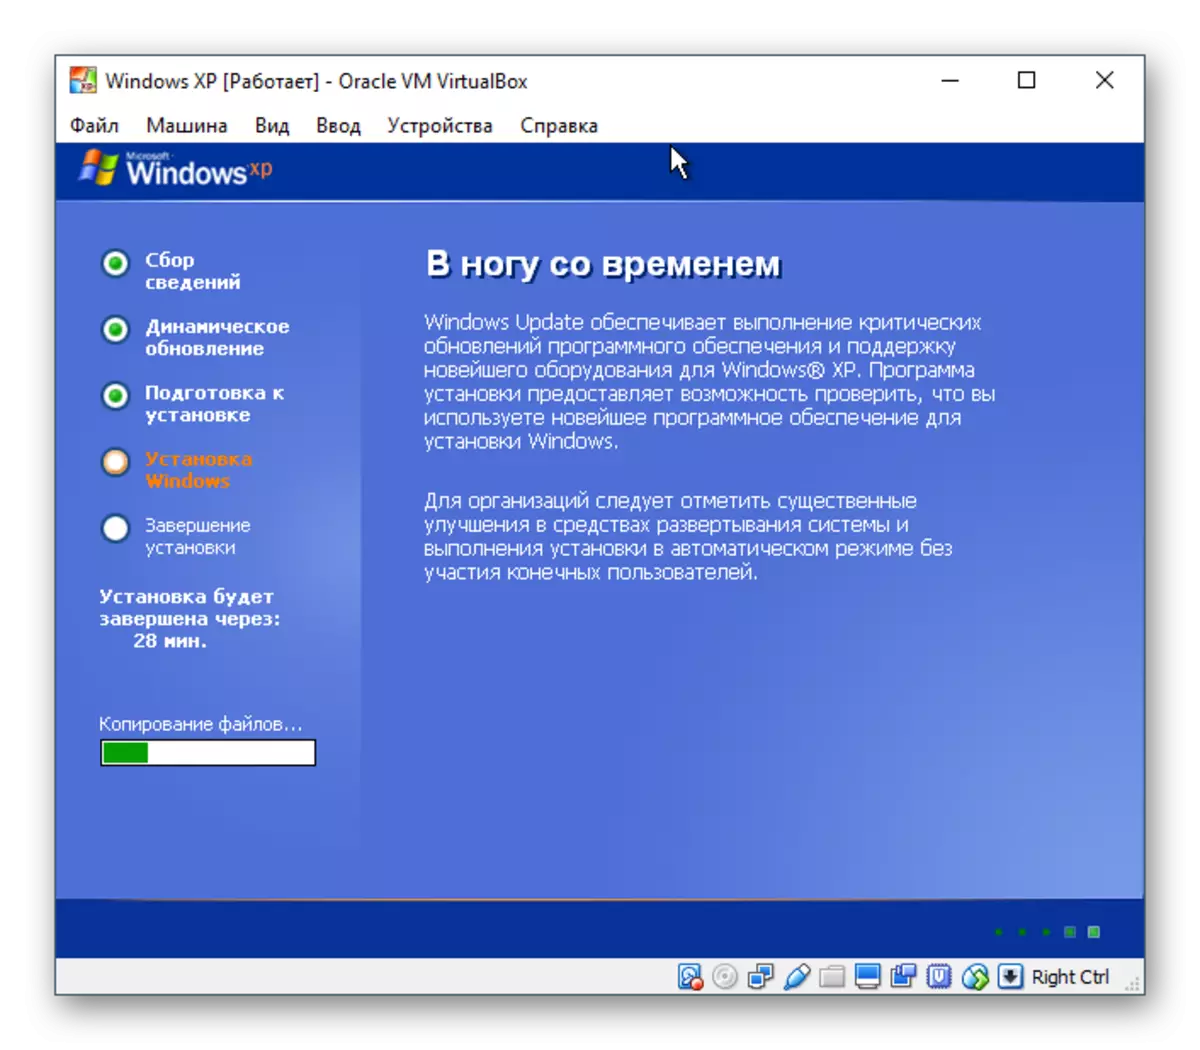 Continue installing Windows XP in VirtualBox